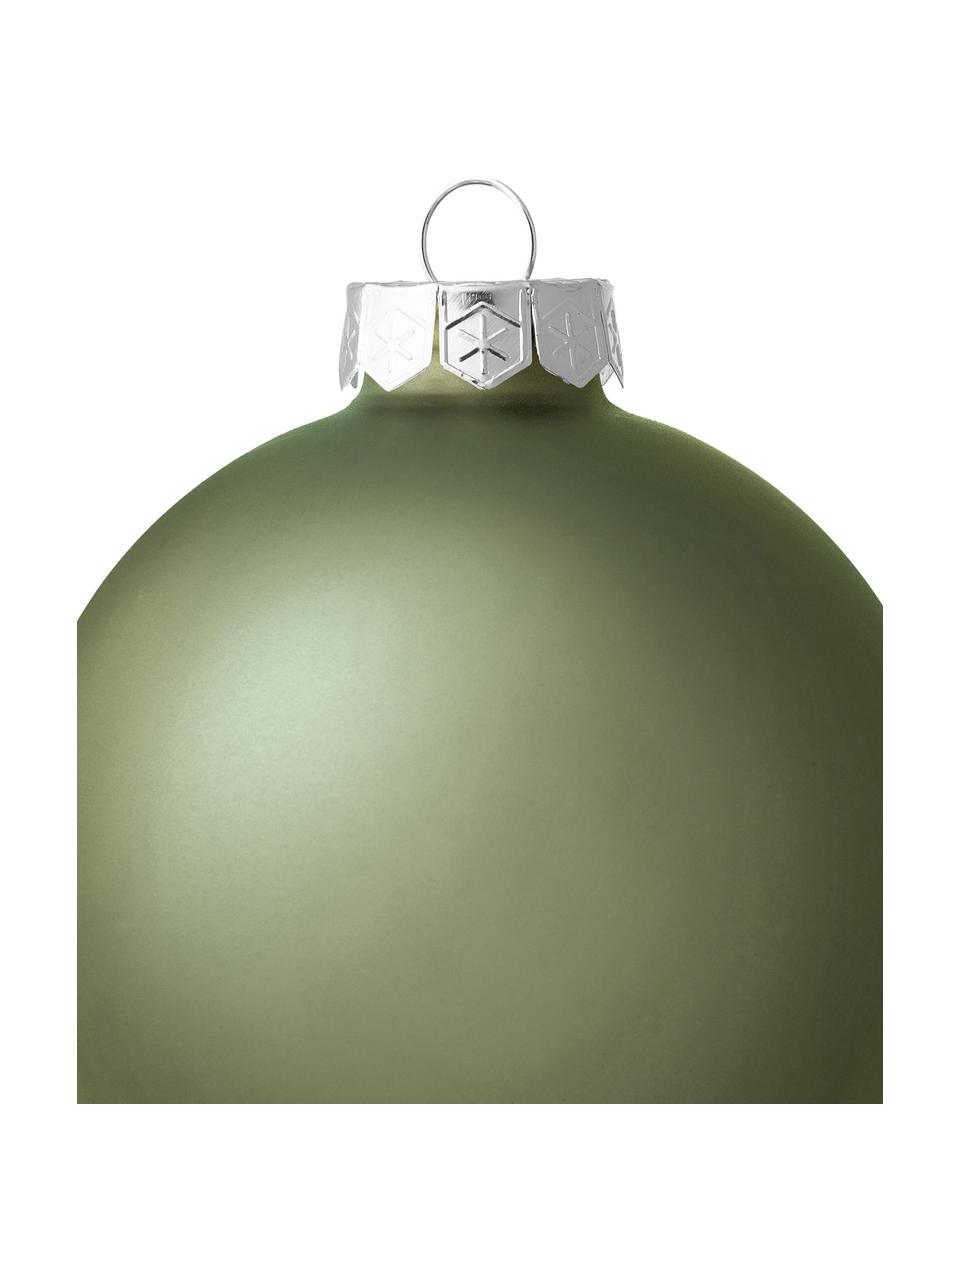 Weihnachtskugeln Evergreen matt/glänzend, verschiedene Grössen, Salbeigrün, Ø 8 cm, 6 Stück